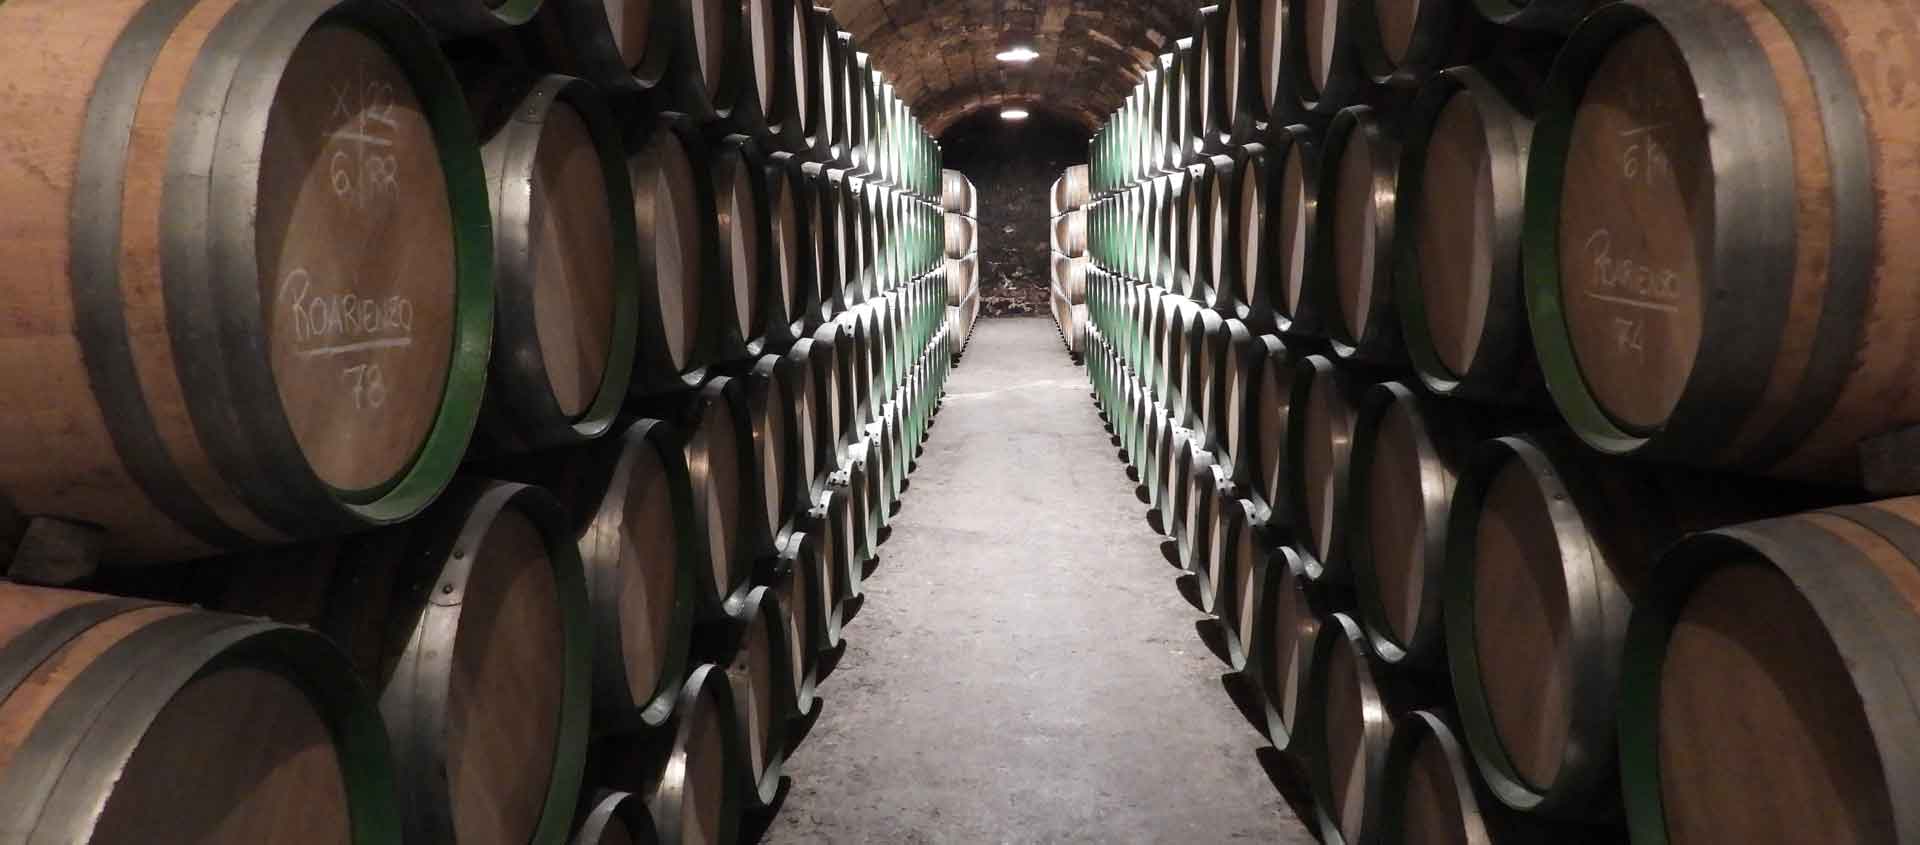 Spain wildlife & culinary tours image of wine cellar